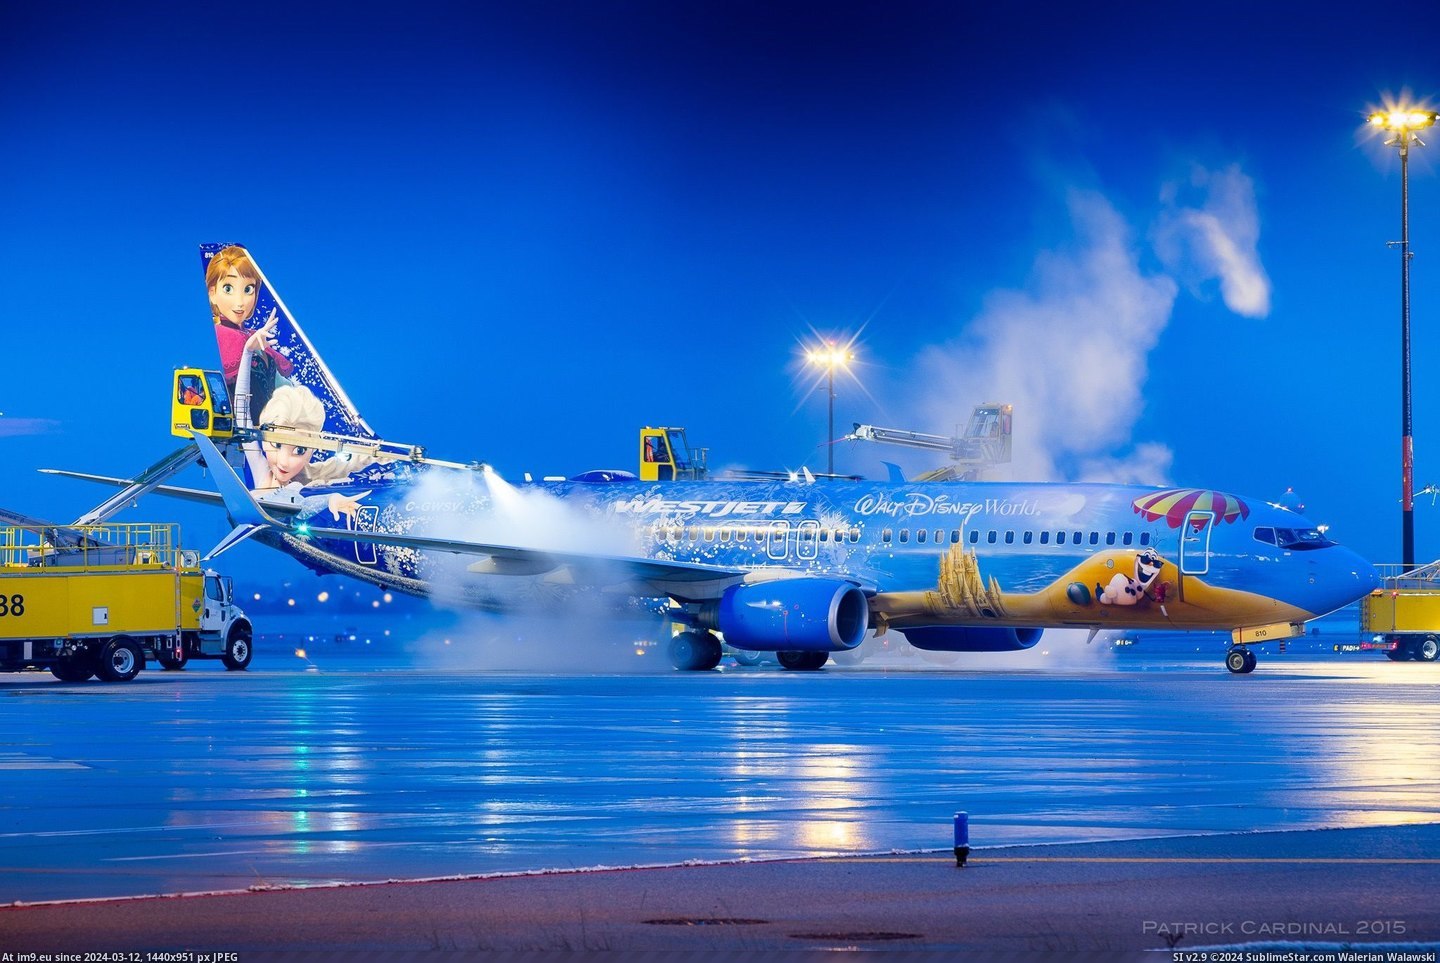 #Frozen #Airport #Crews #Plane #Ground [Pics] Airport ground crews de-icing a Frozen plane Pic. (Изображение из альбом My r/PICS favs))